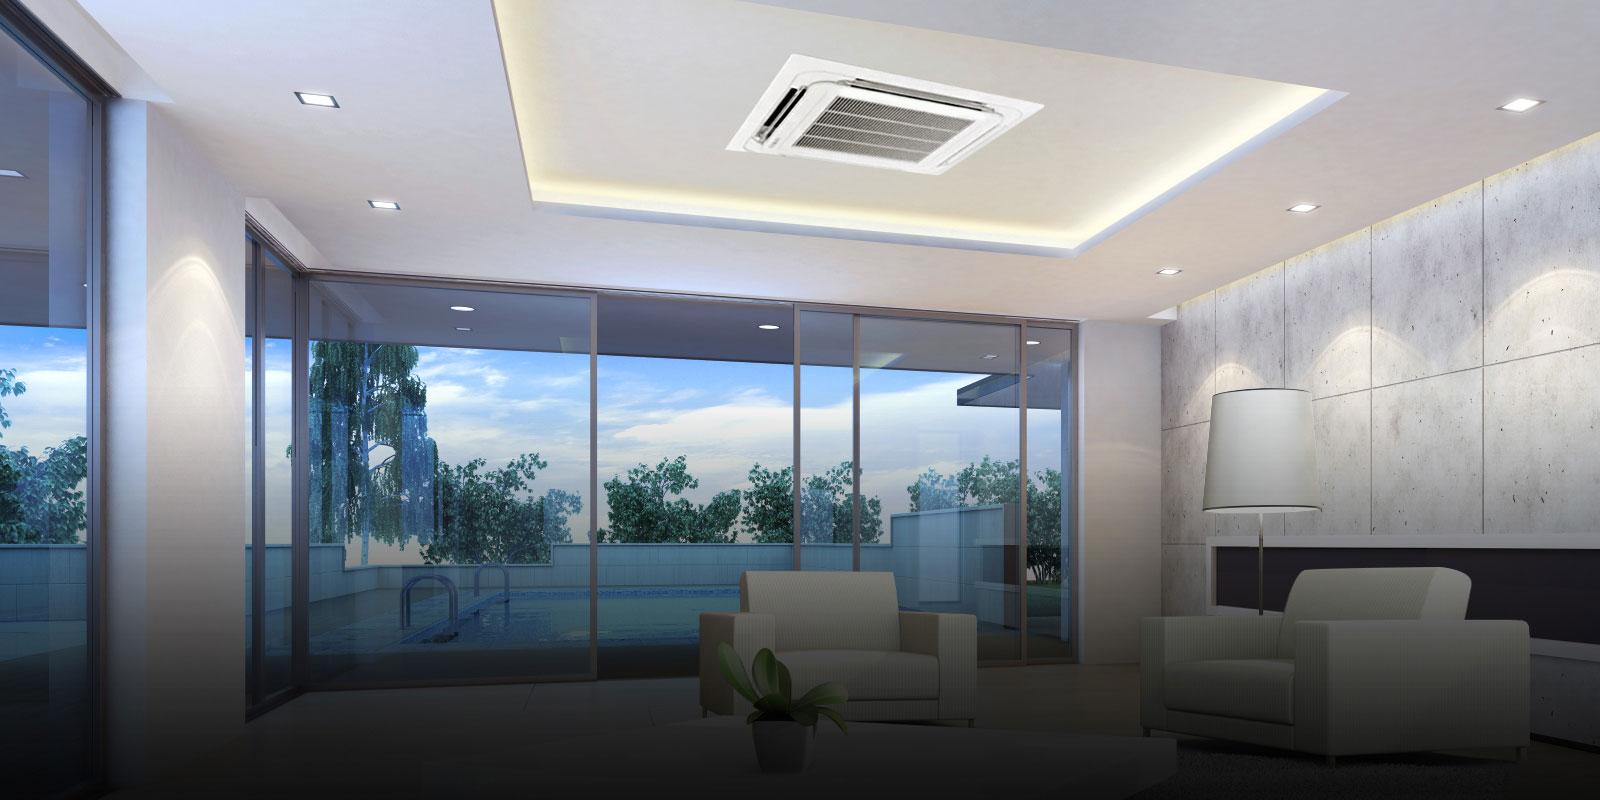 installation climatisation pour plafond